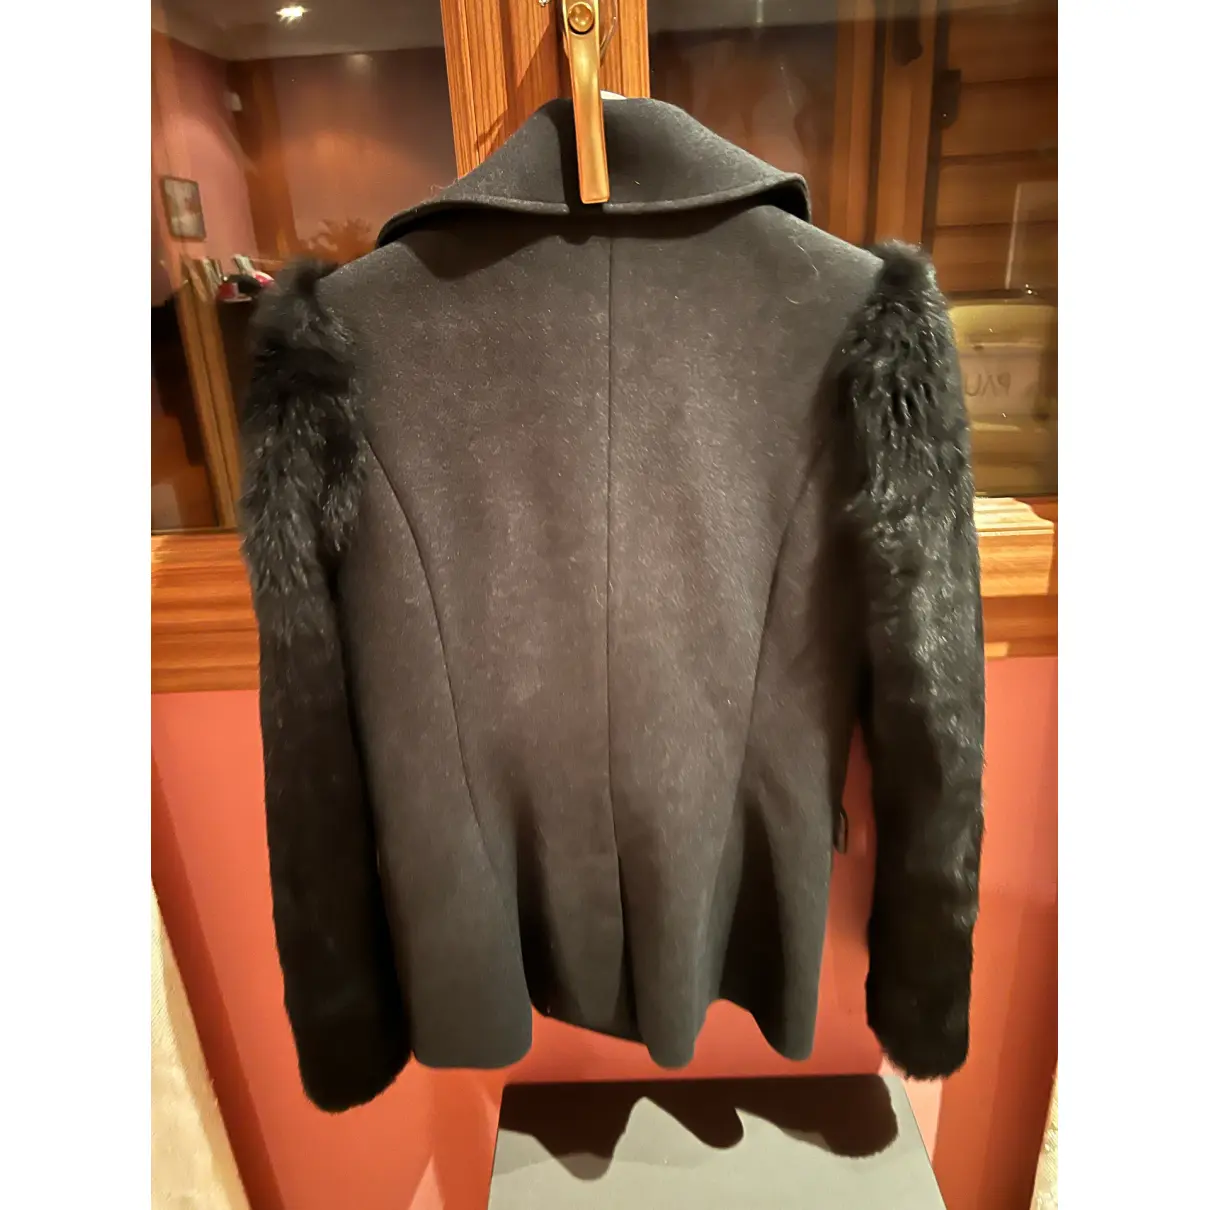 Buy Monika Chiang Wool coat online